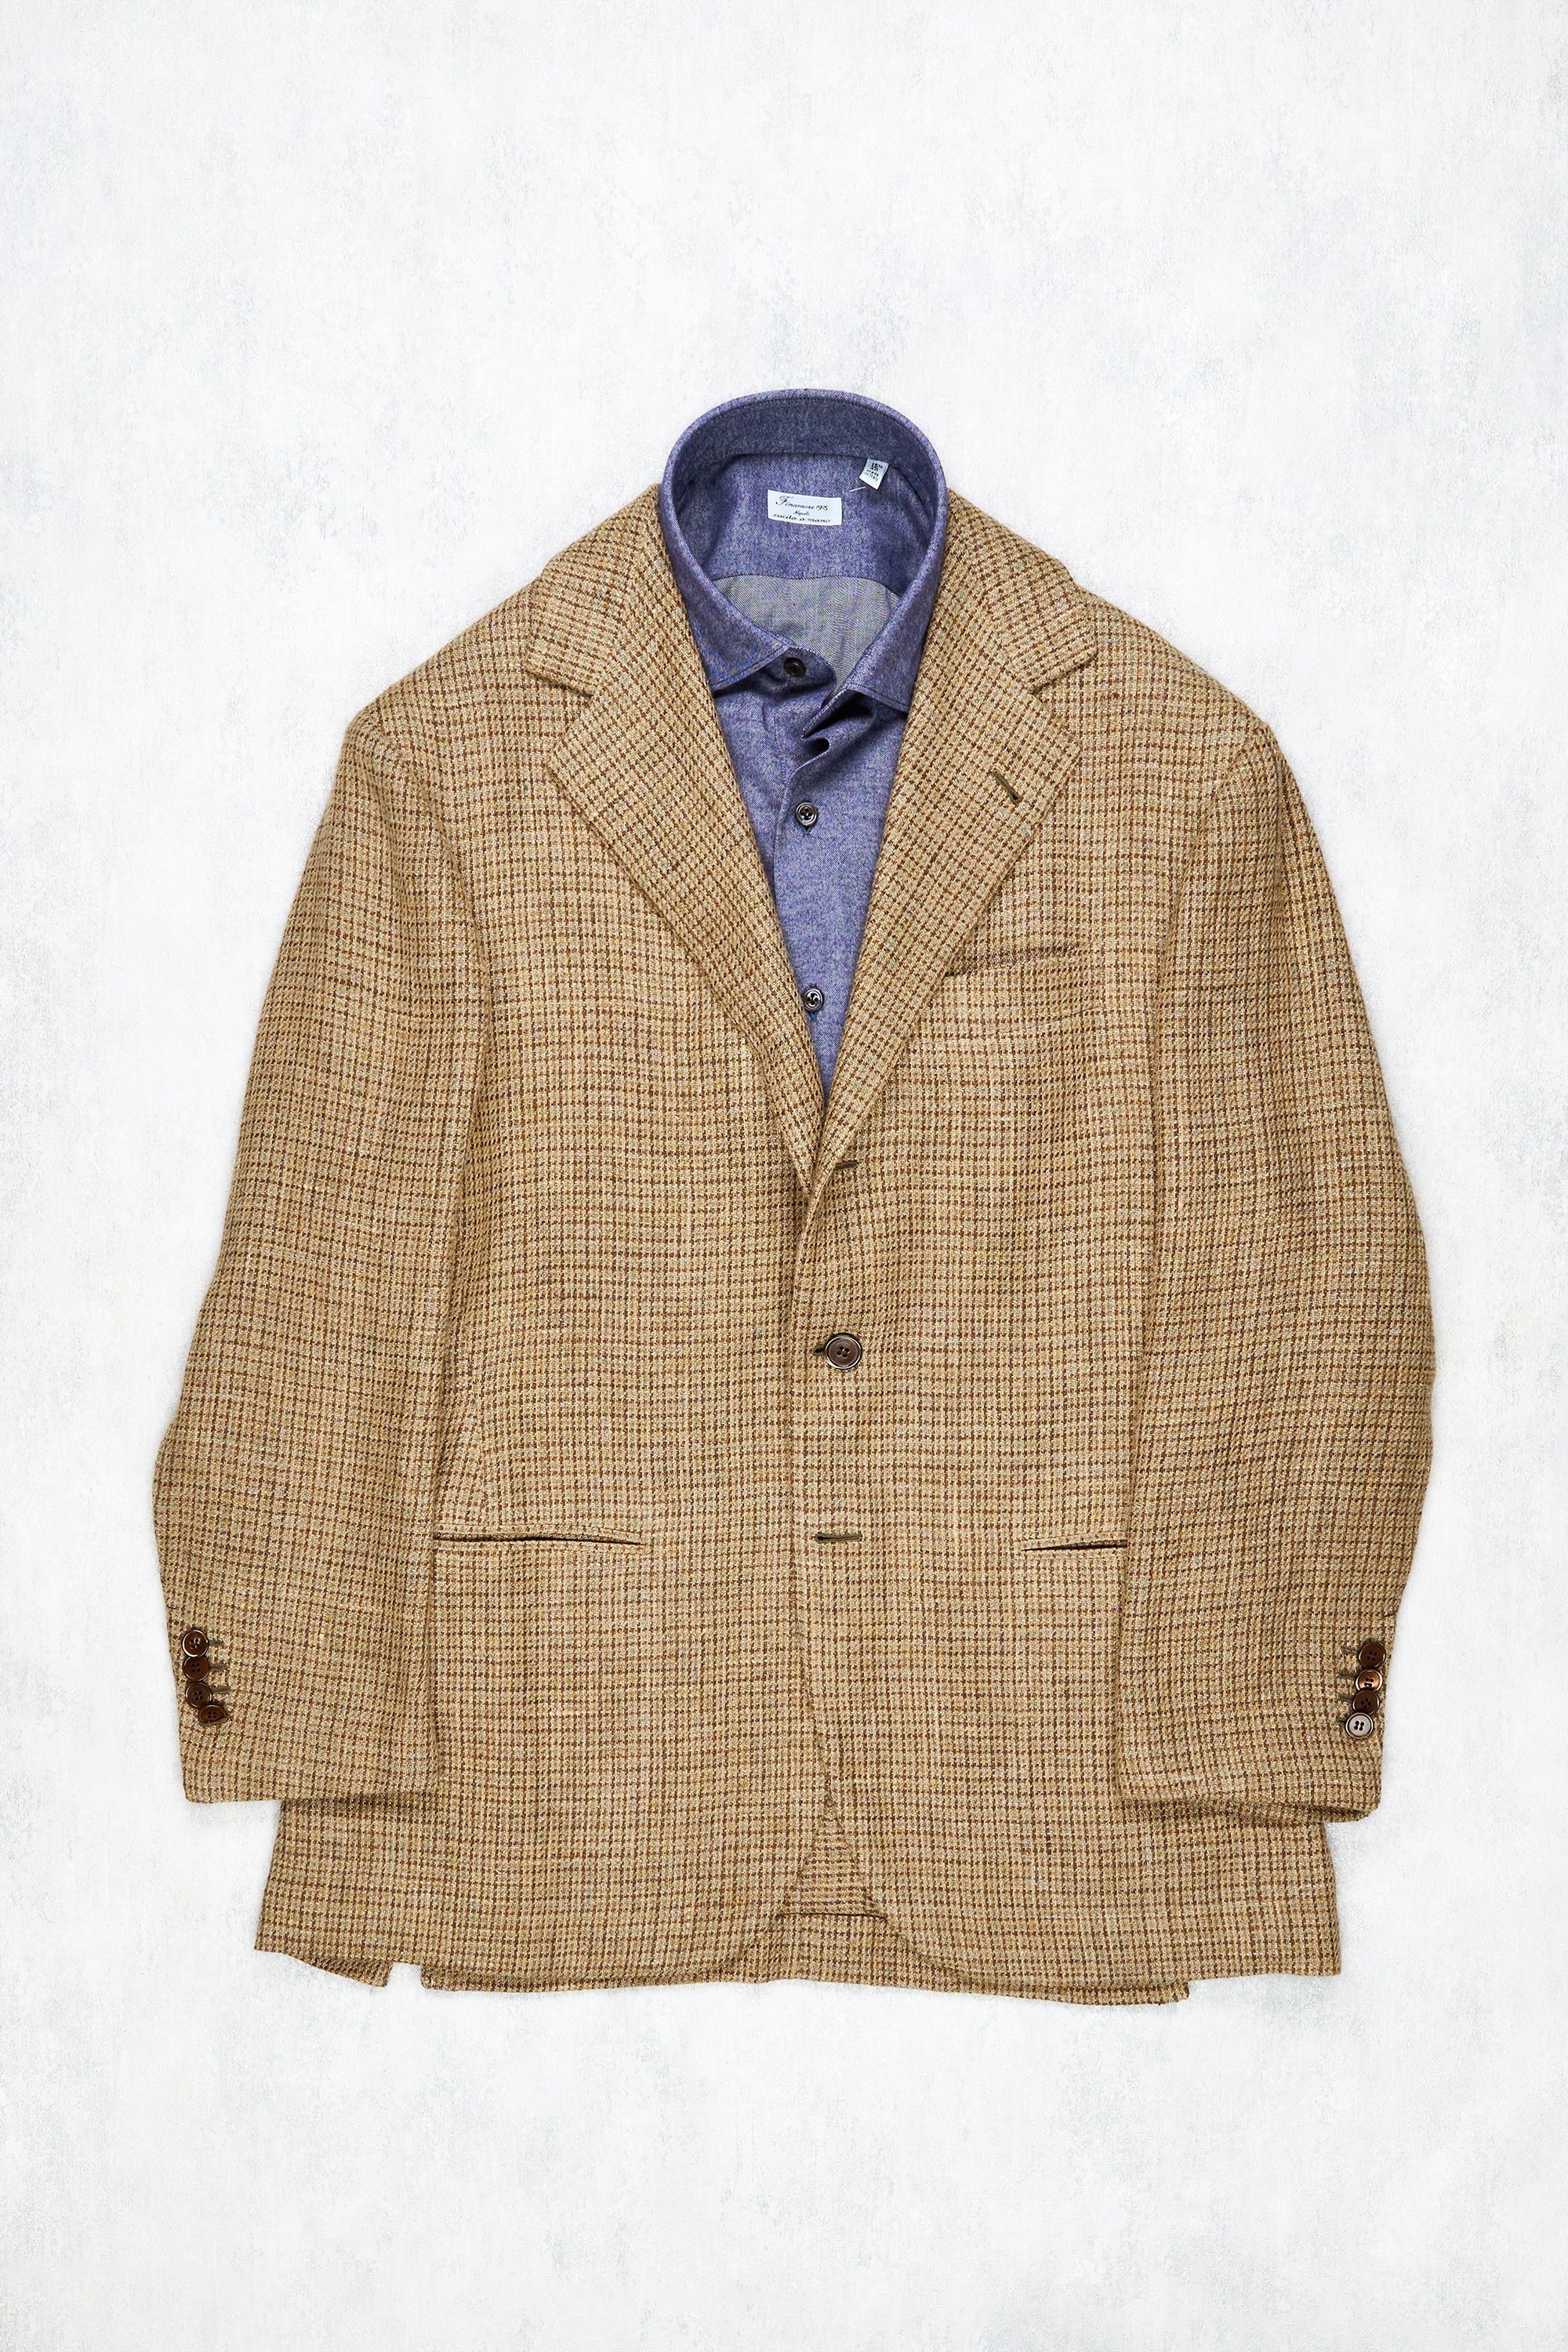 Liverano & Liverano Beige/Brown/Green Wool/Linen Sport Coat Bespoke